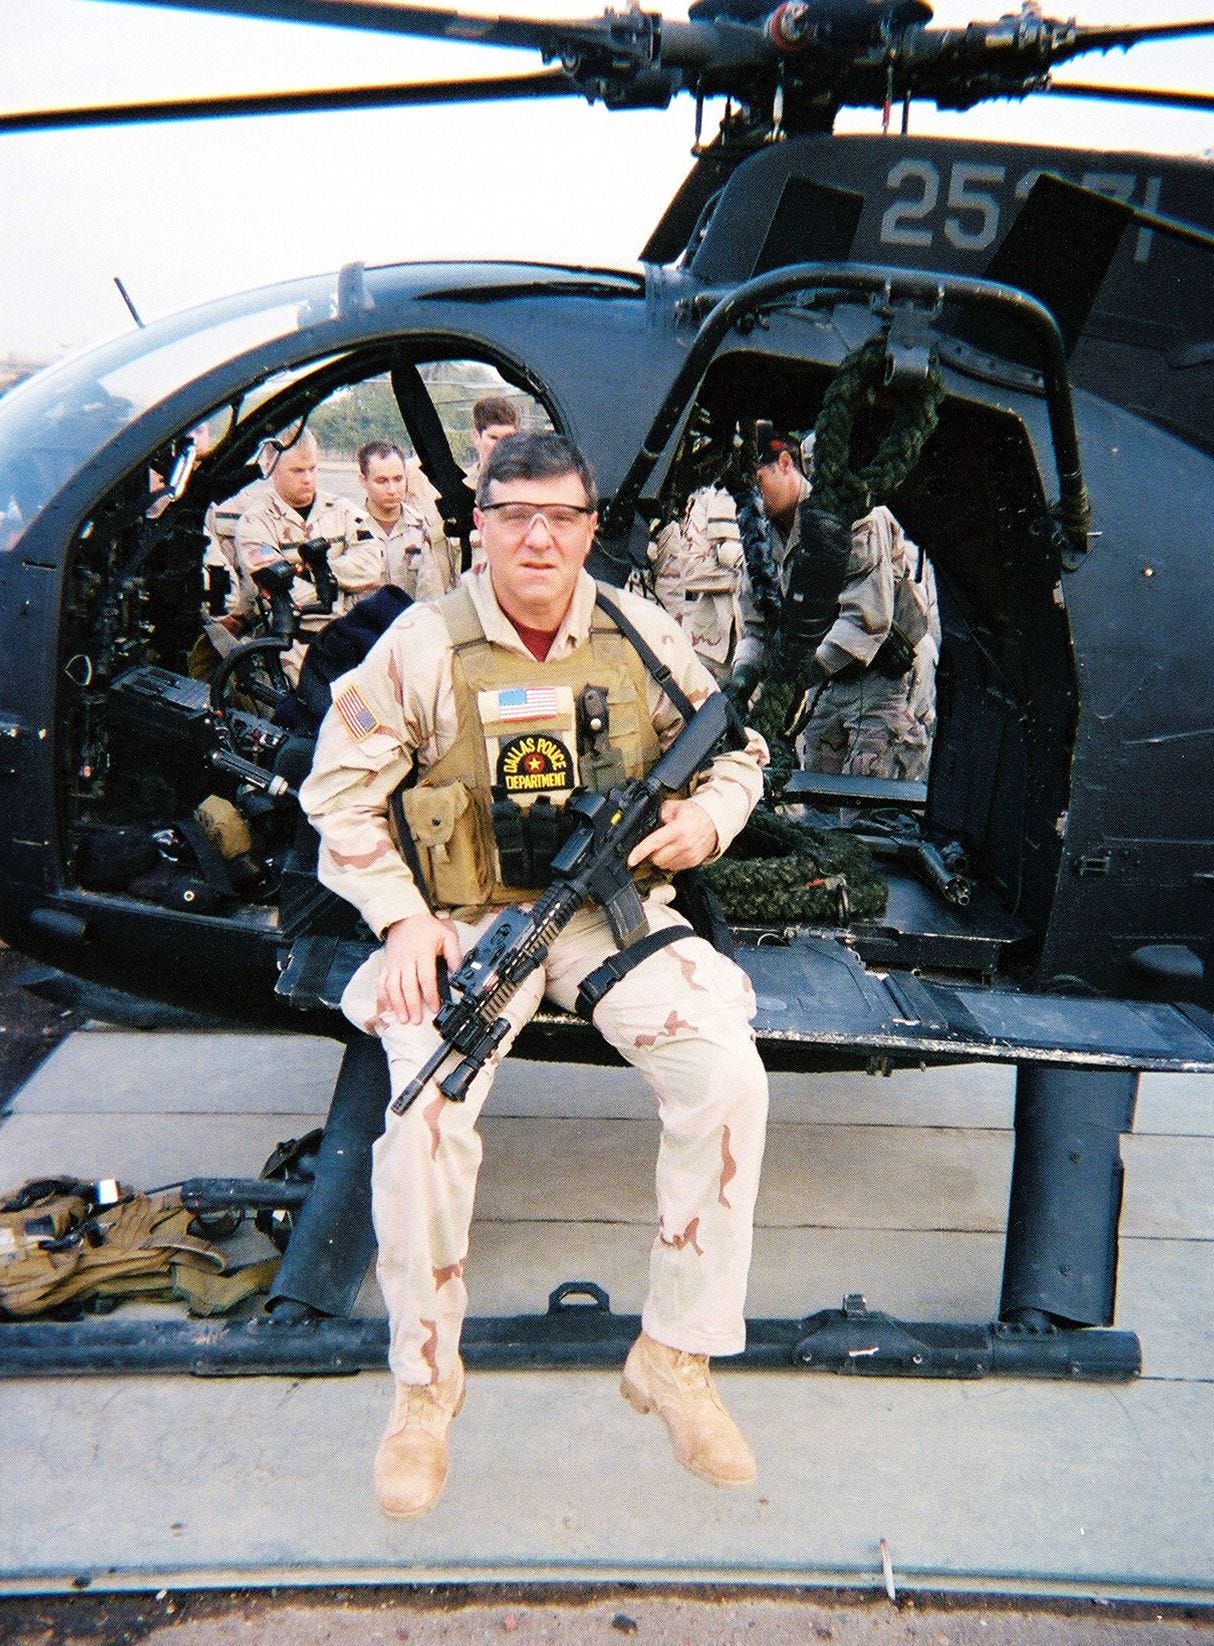 Greg Coker on MH-6 Little Bird helicopter in Iraq